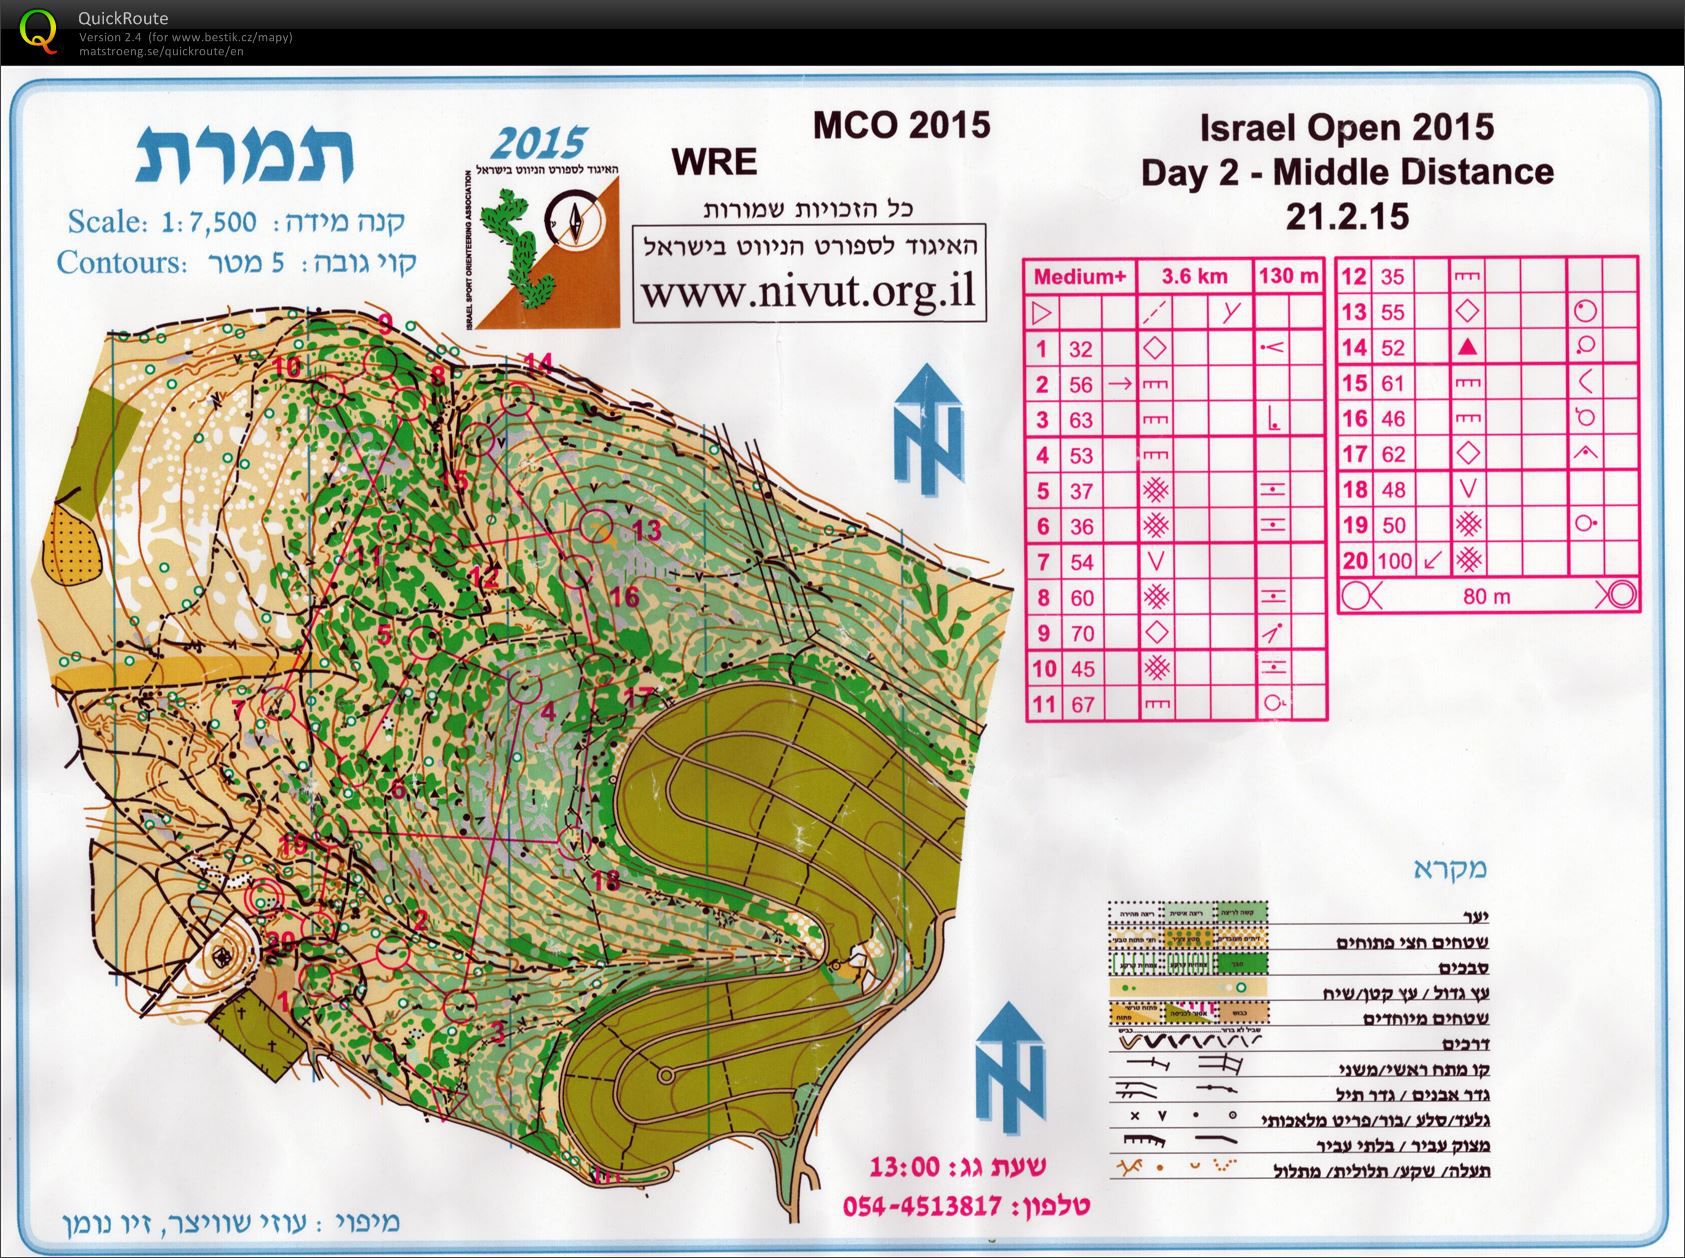 MCO Israel Open 2015 (21/02/2015)